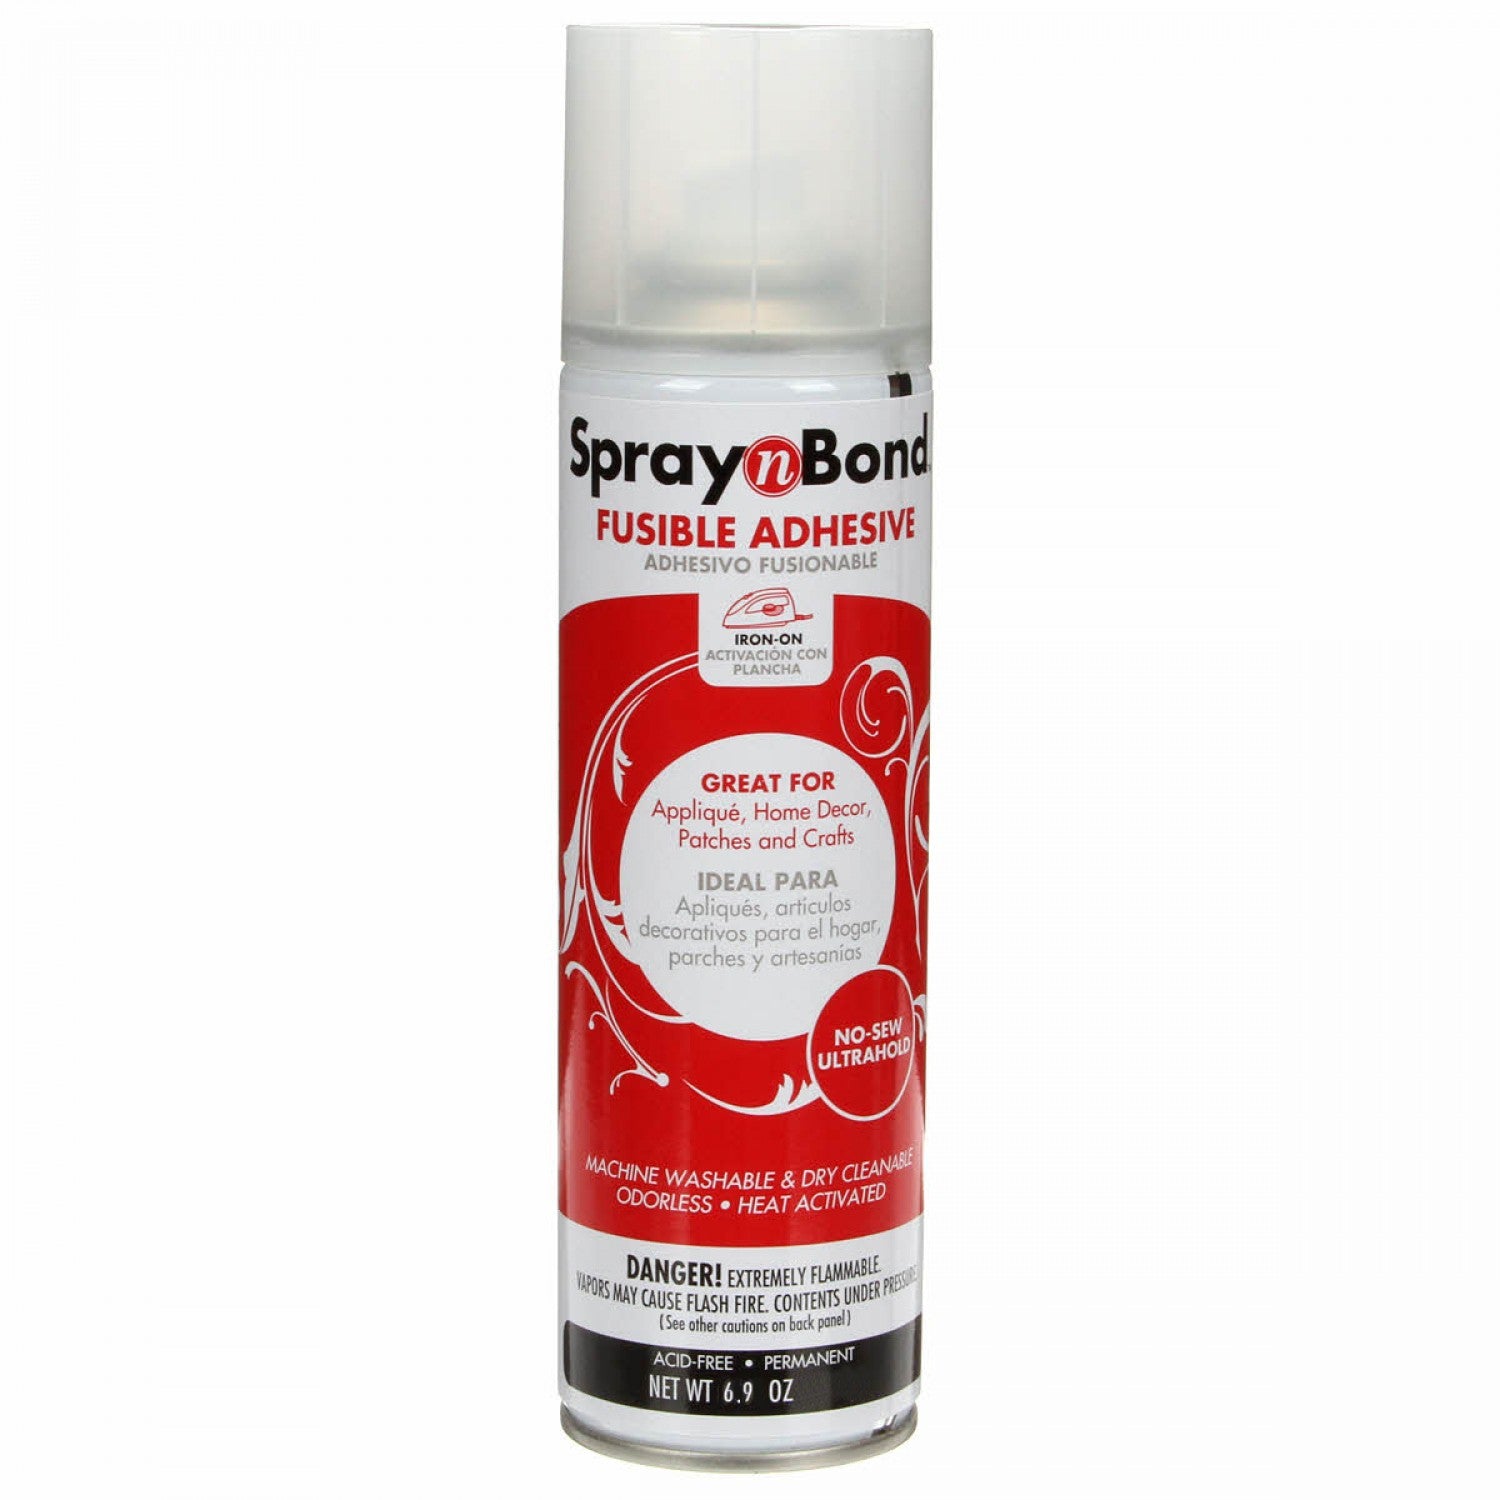 Spray N Bond Ultrahold Fusible Adhesive Spray, 6.9oz image # 64038